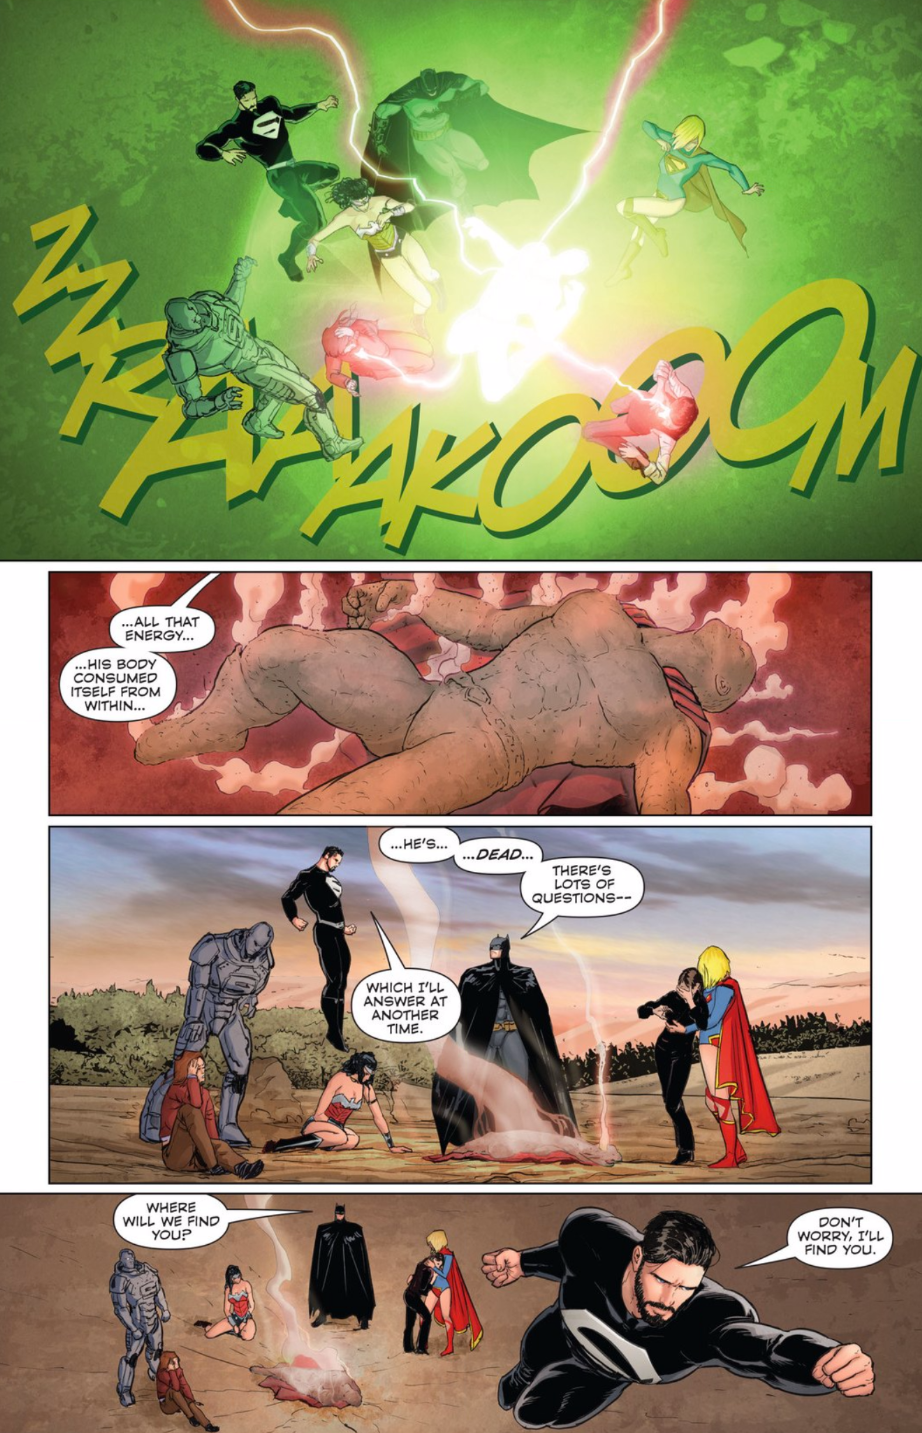 31-32 - [DC Comics] Superman: Discusión General - Página 10 Pmxp5wkhym7m6rtysmbn